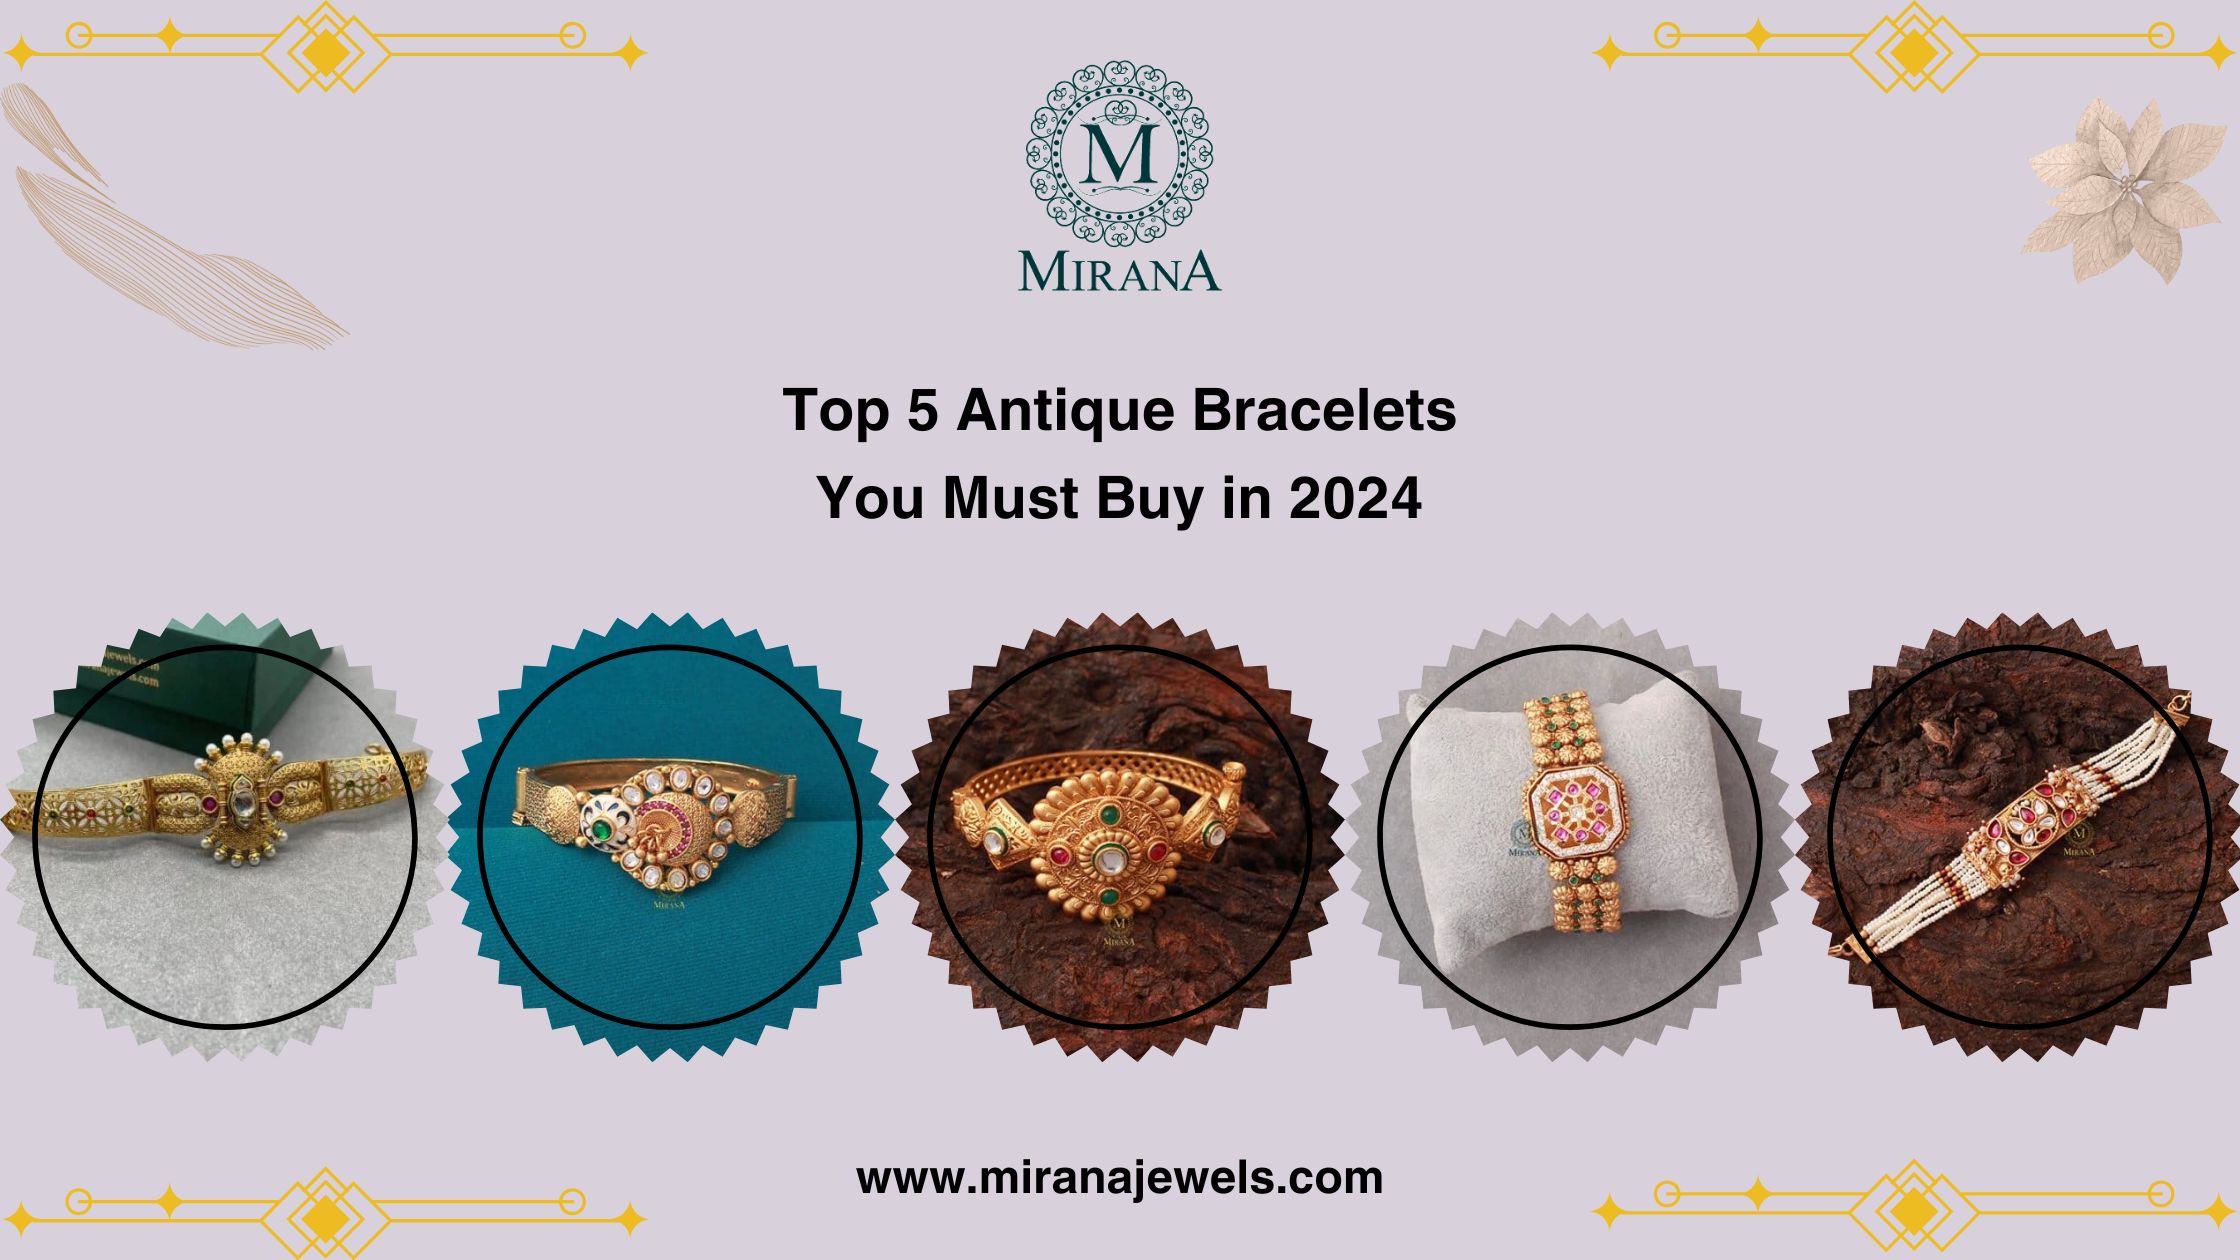 Top 5 Antique Bracelets You Must Buy in 2024